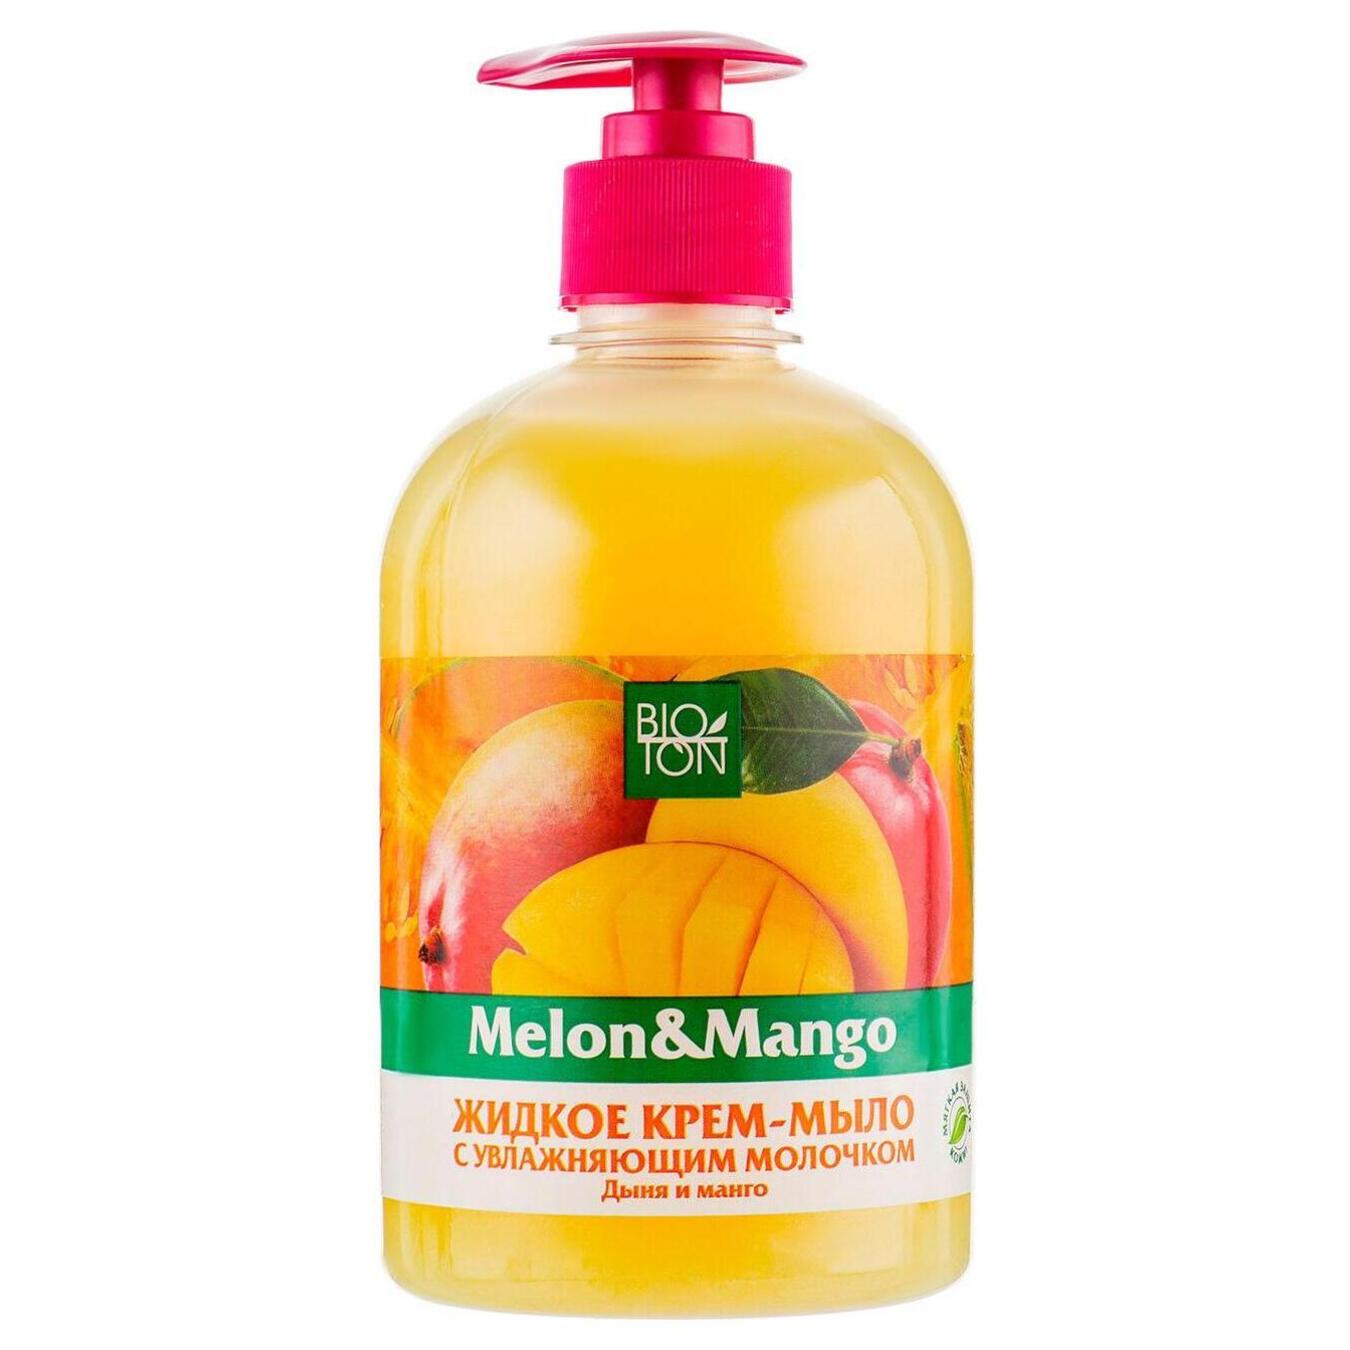 Liquid soap Bioton melon and mango with moisturizing milk 500ml